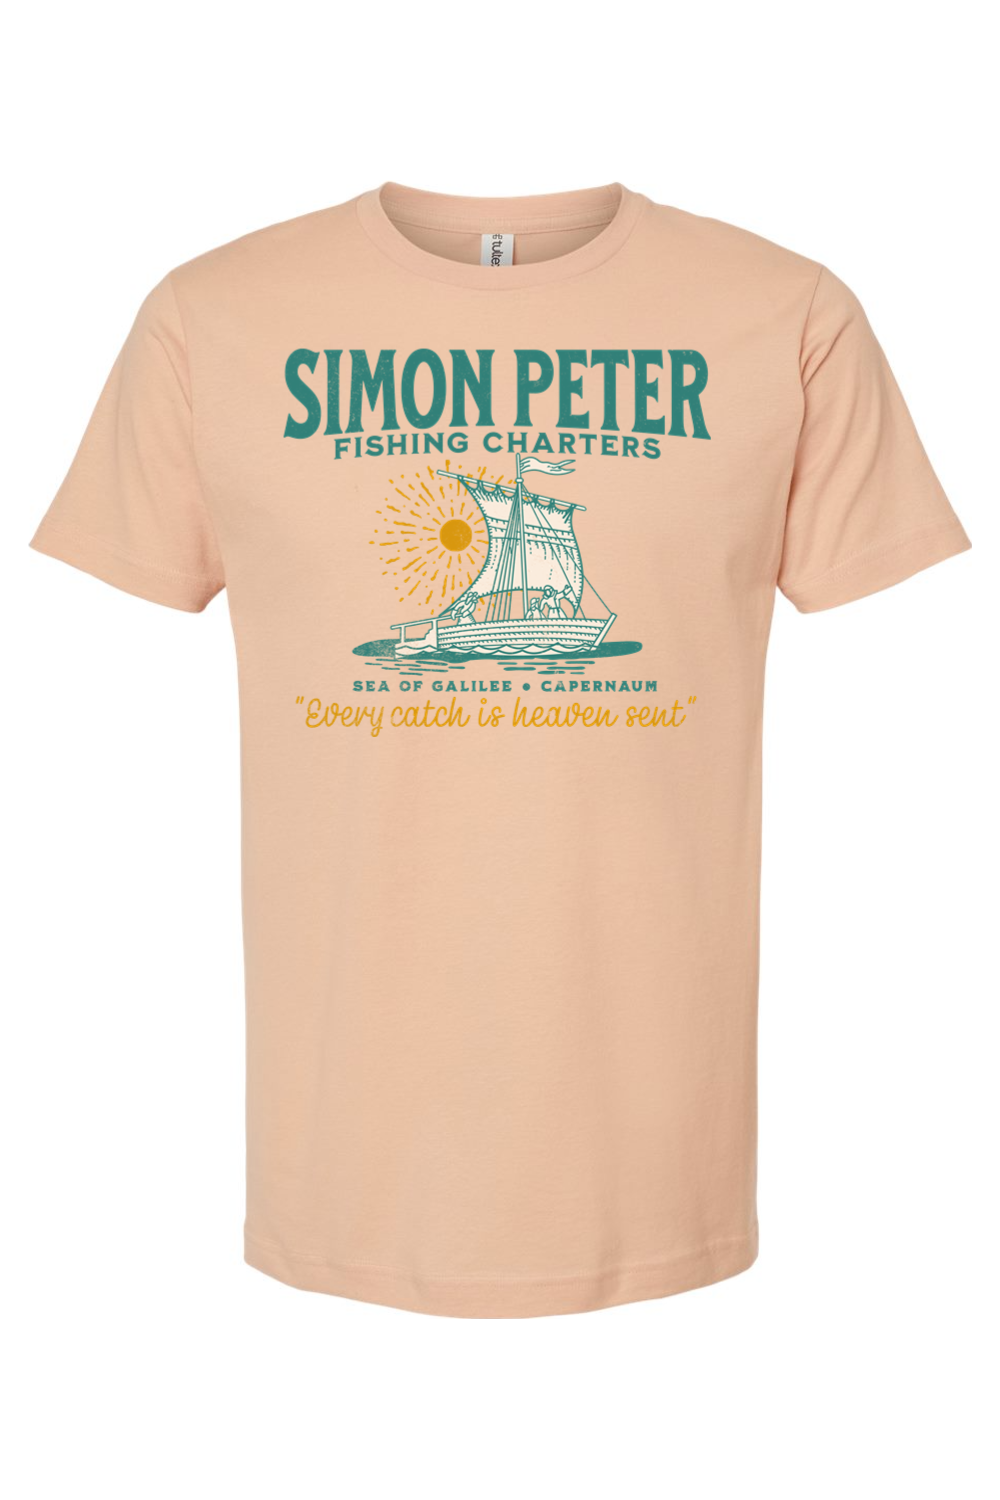 Simon Peter Fishing Charters - T-Shirt